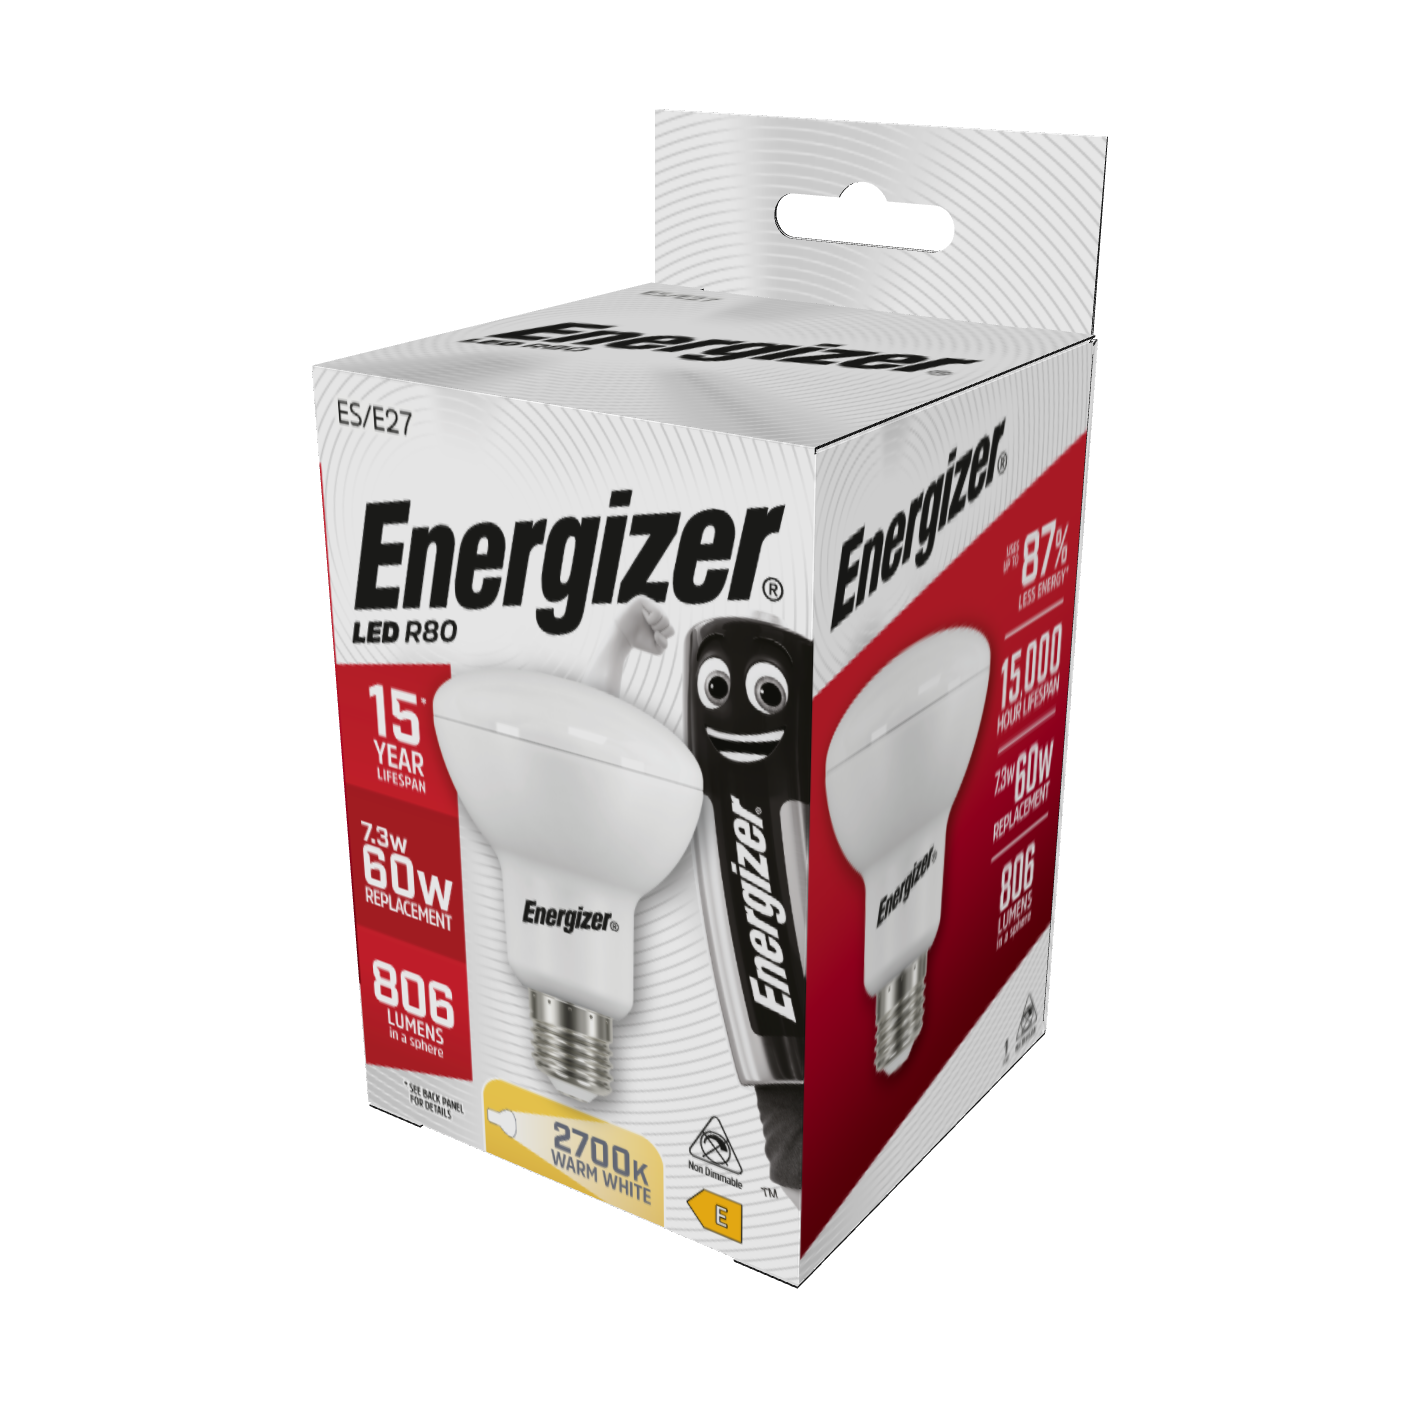 Energizer LED R80 Reflector E27 (ES) 806lm 7.3W 2,700K (Warm White), Box of 1